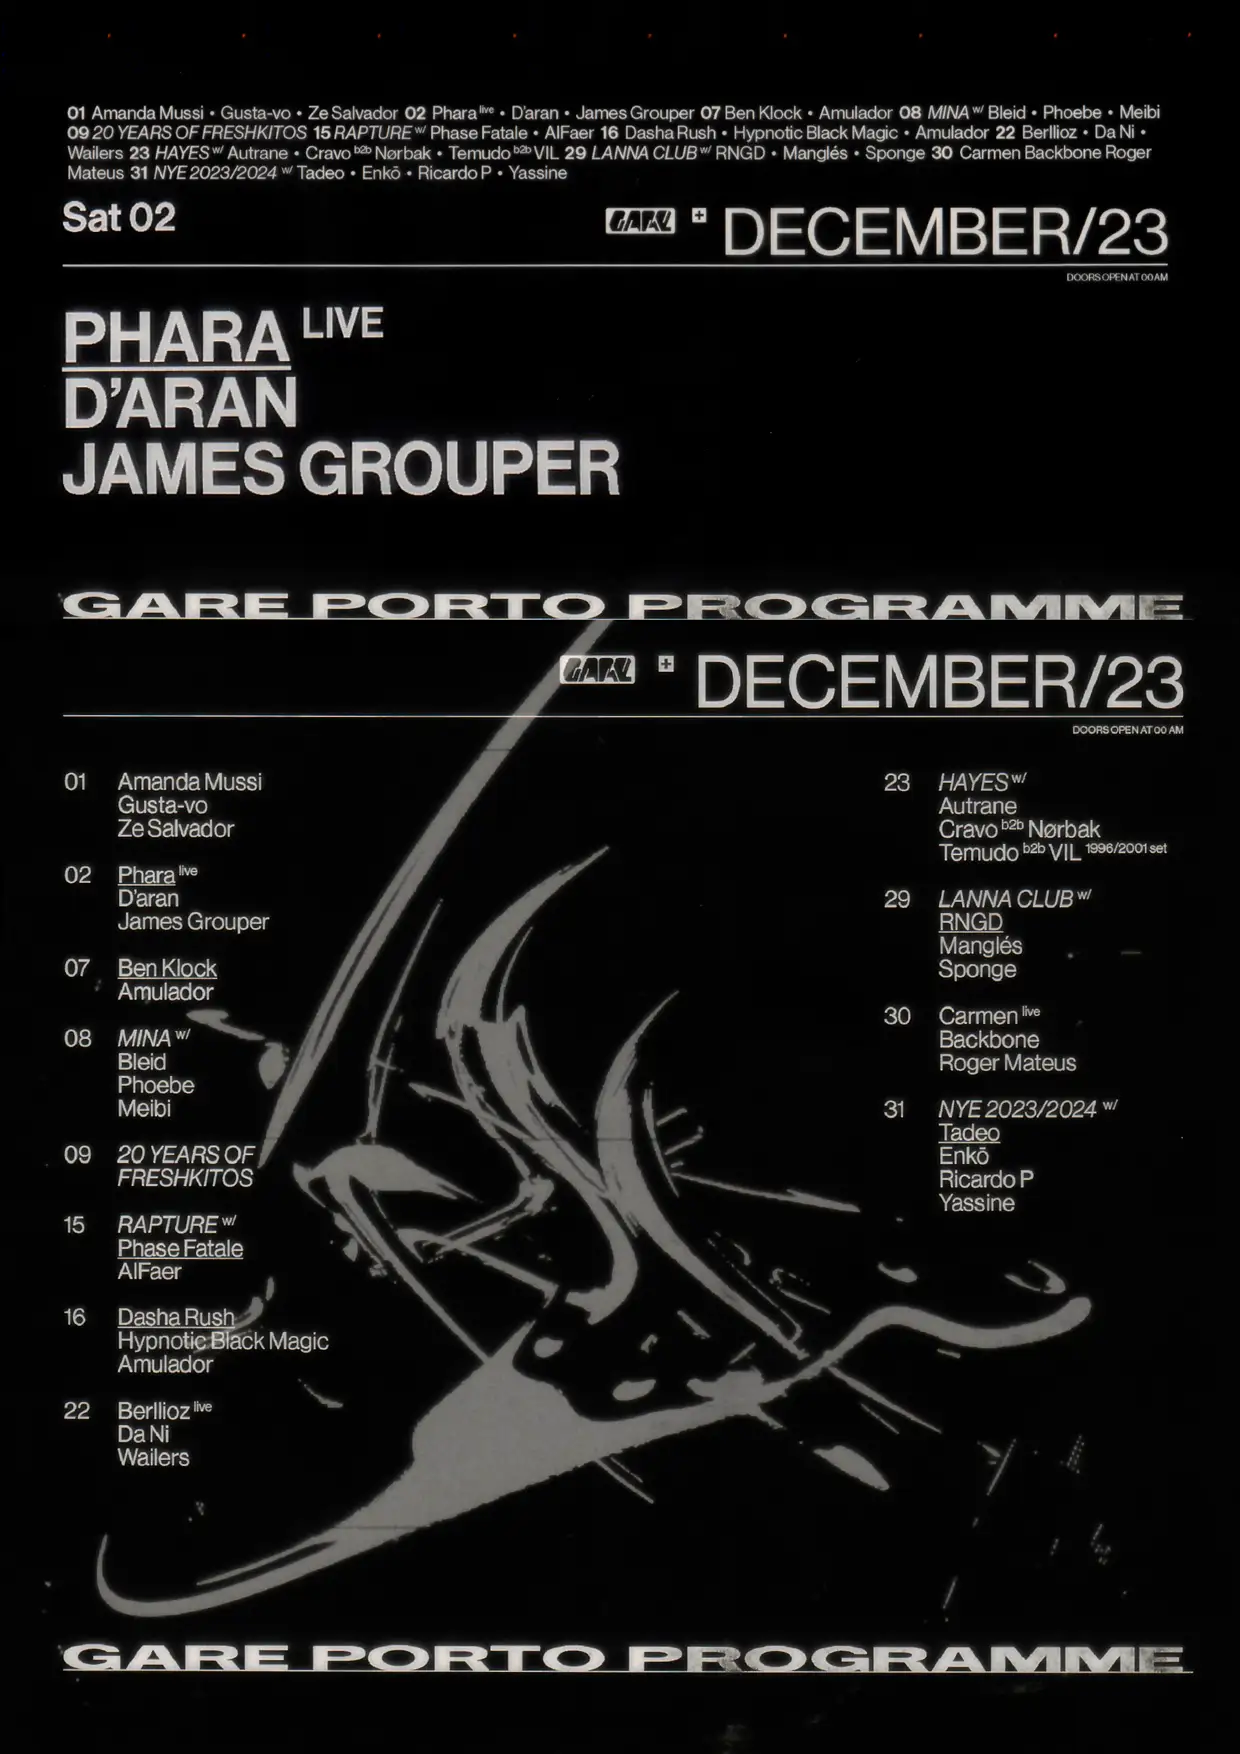 Phara live + D'aran + James Grouper